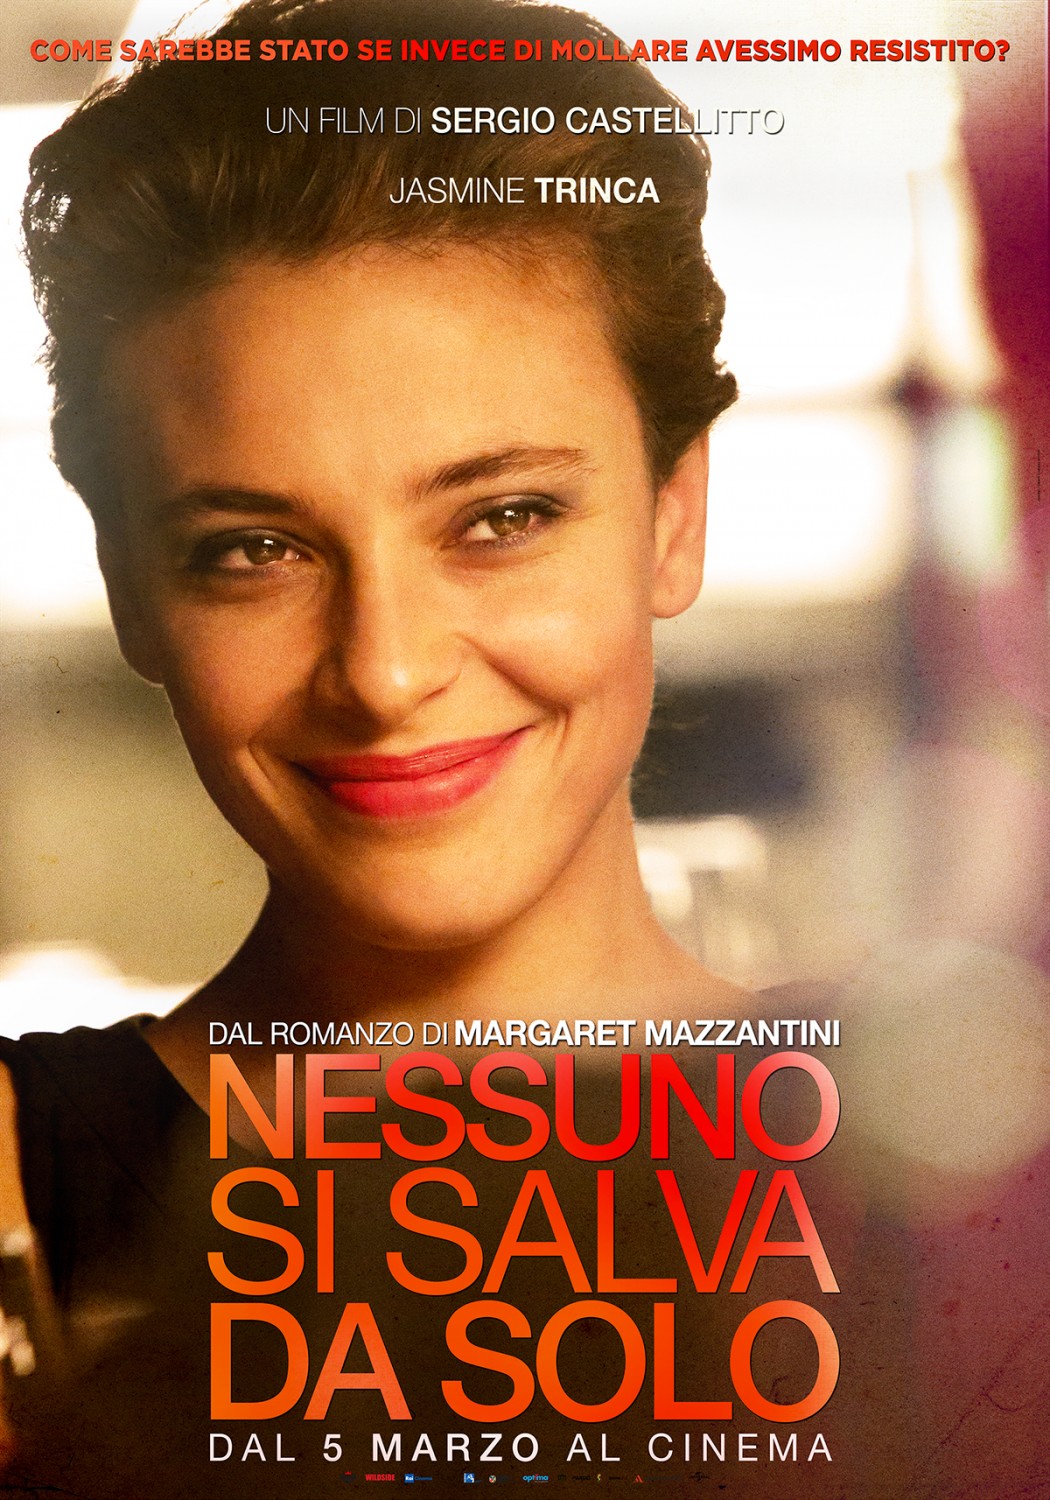 Extra Large Movie Poster Image for Nessuno si salva da solo (#3 of 3)